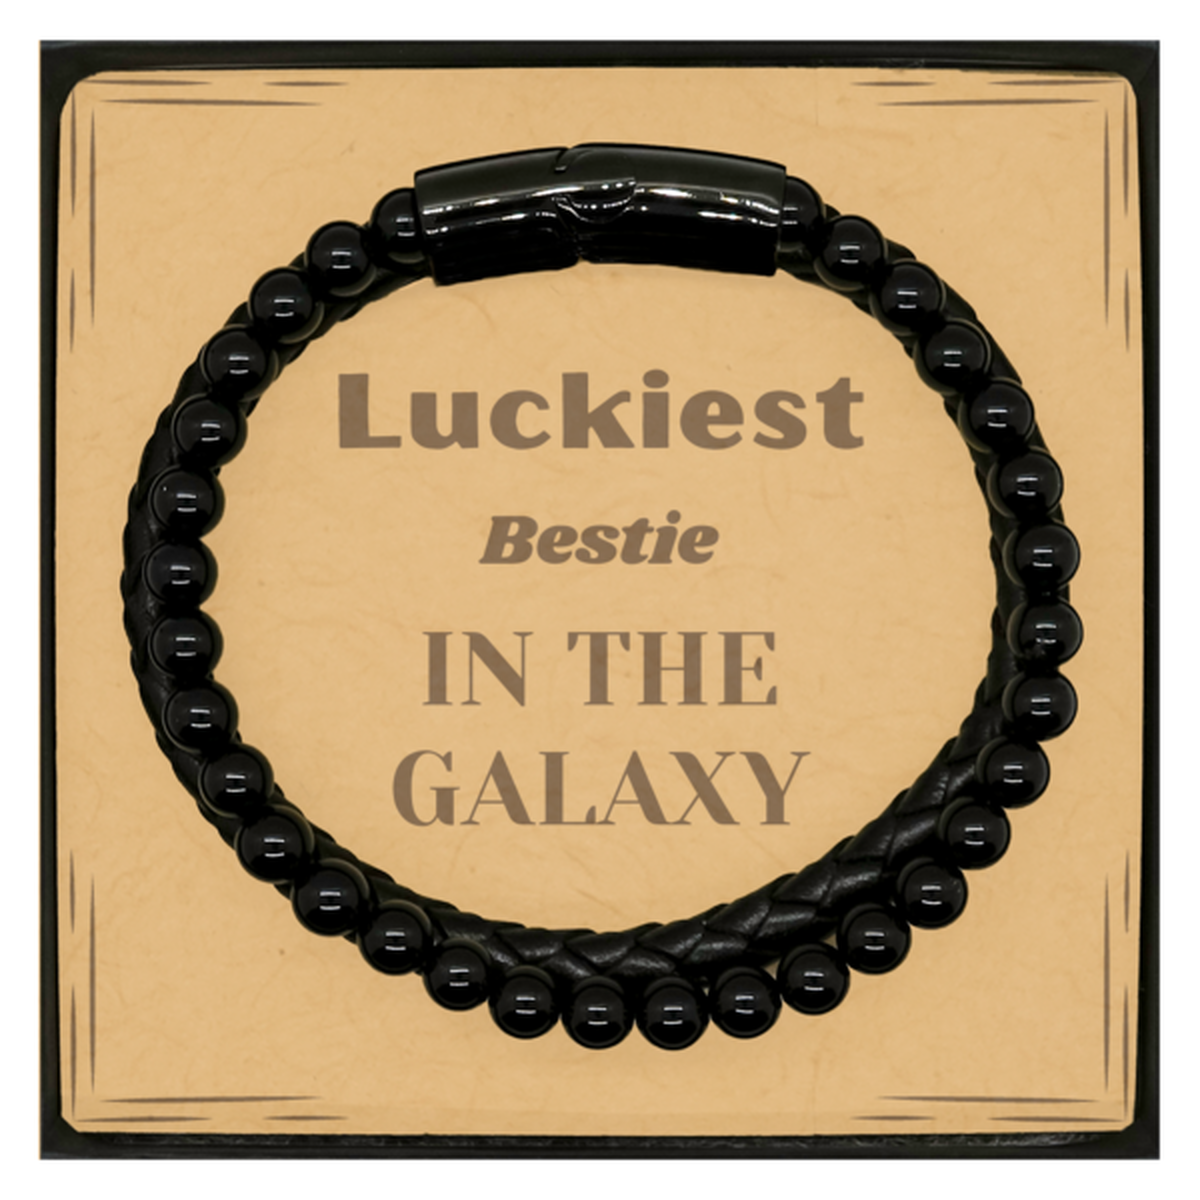 Luckiest Bestie in the Galaxy, To My Bestie Message Card Gifts, Christmas Bestie Stone Leather Bracelets Gifts, X-mas Birthday Unique Gifts For Bestie Men Women